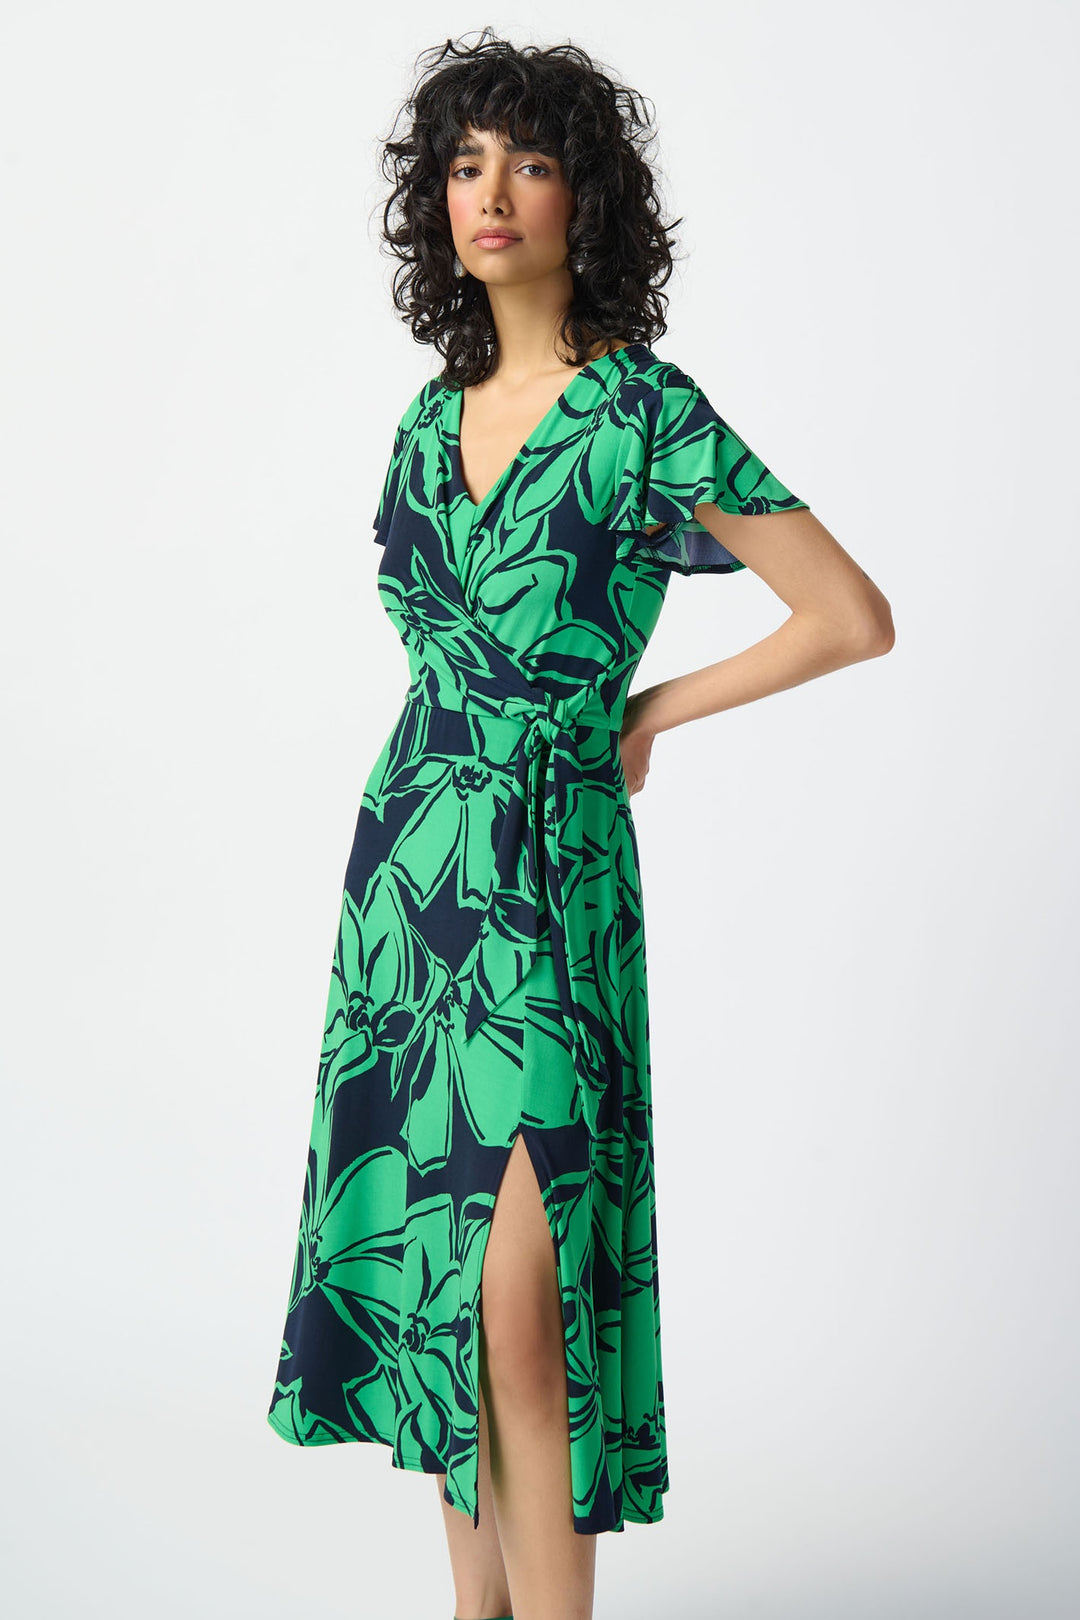 Joseph Ribkoff 241052 Green Floral Print Jersey Wrap Dress - Dotique Chesterfield